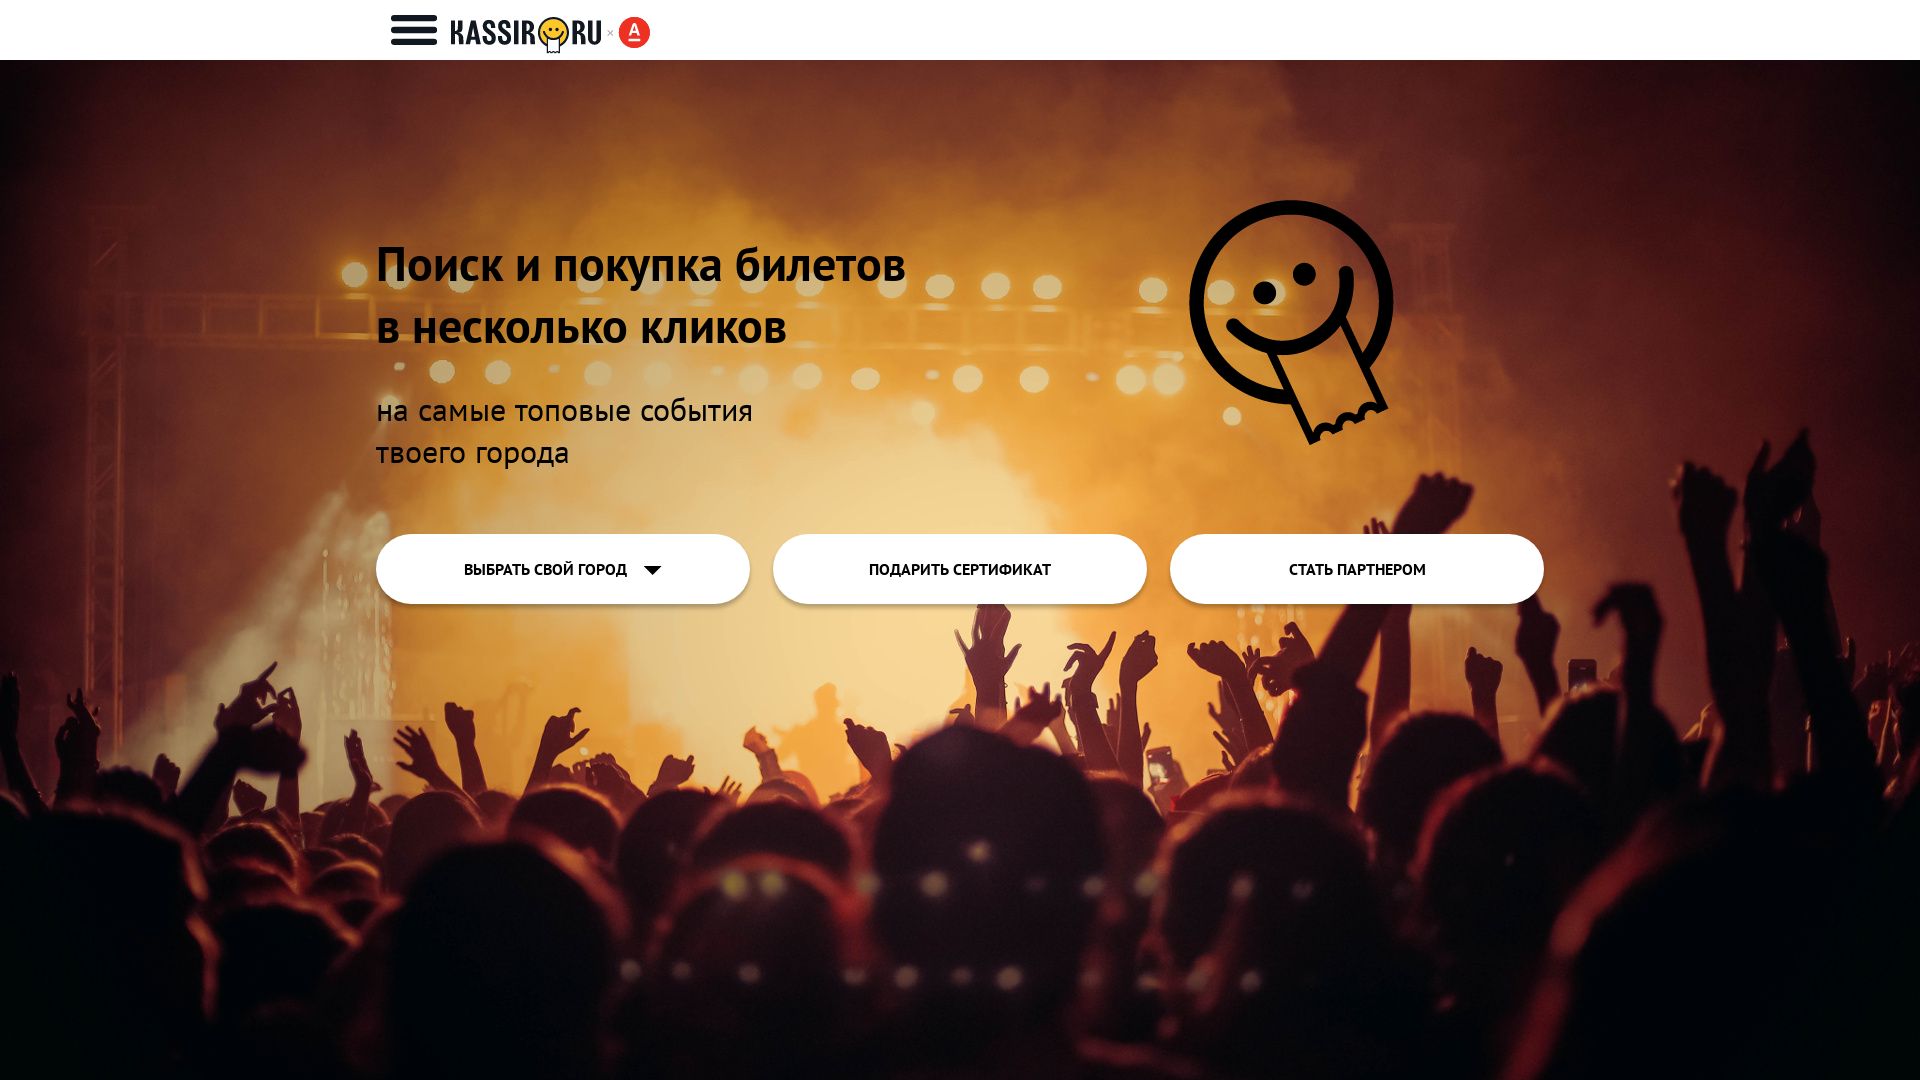 Estado web kassir.ru está   ONLINE